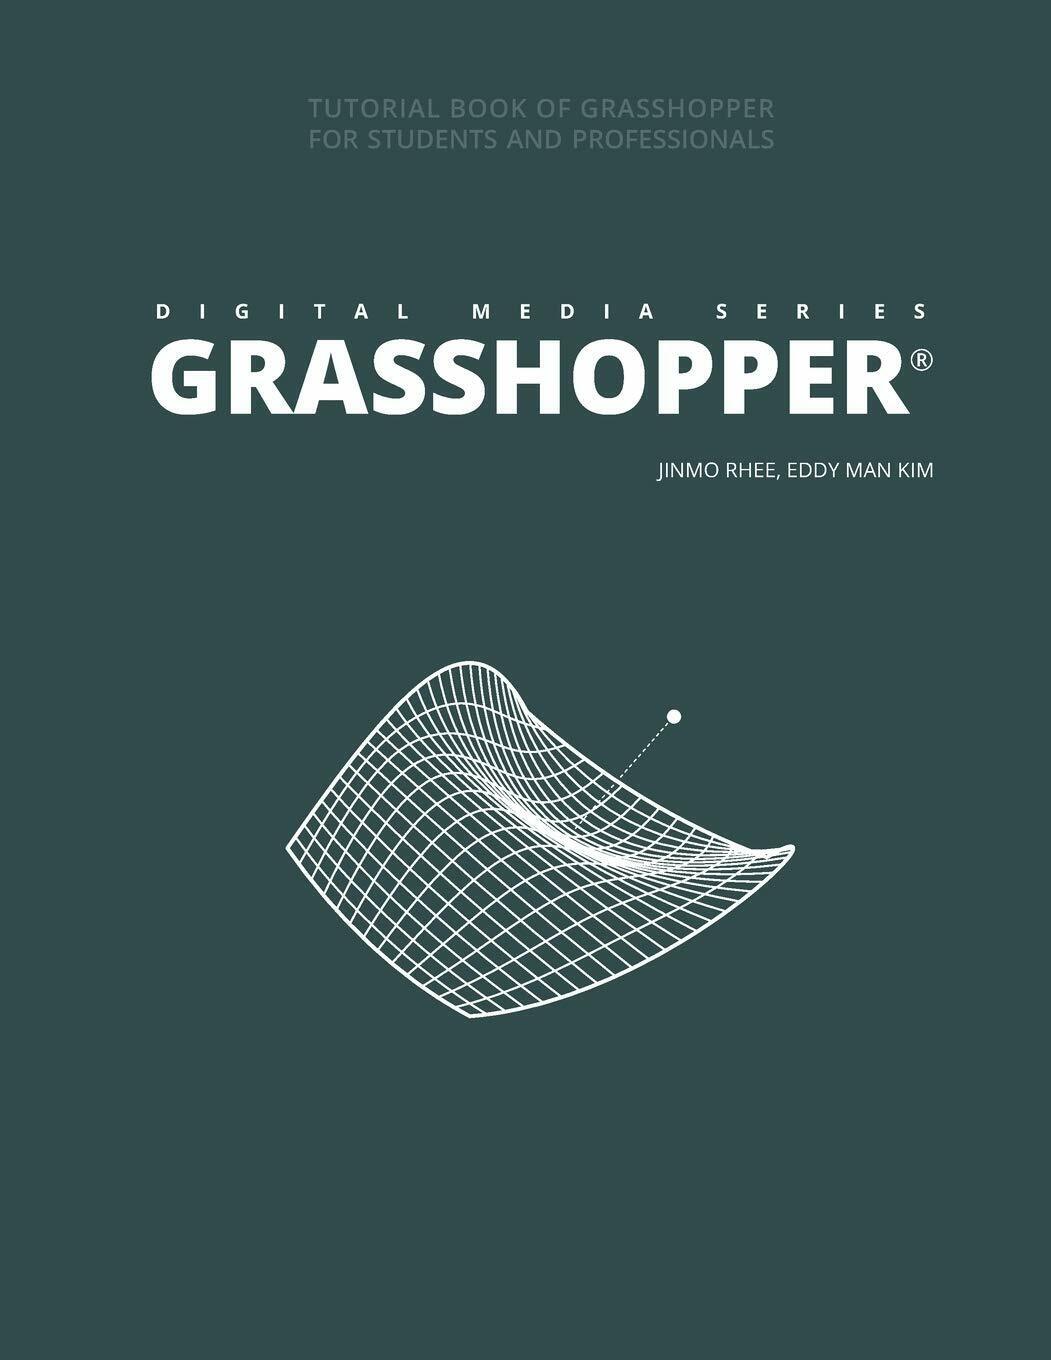 Digital Media Series Grasshopper di Eddy Man Kim, Jinmo Rhee,  2020,  Indipenden